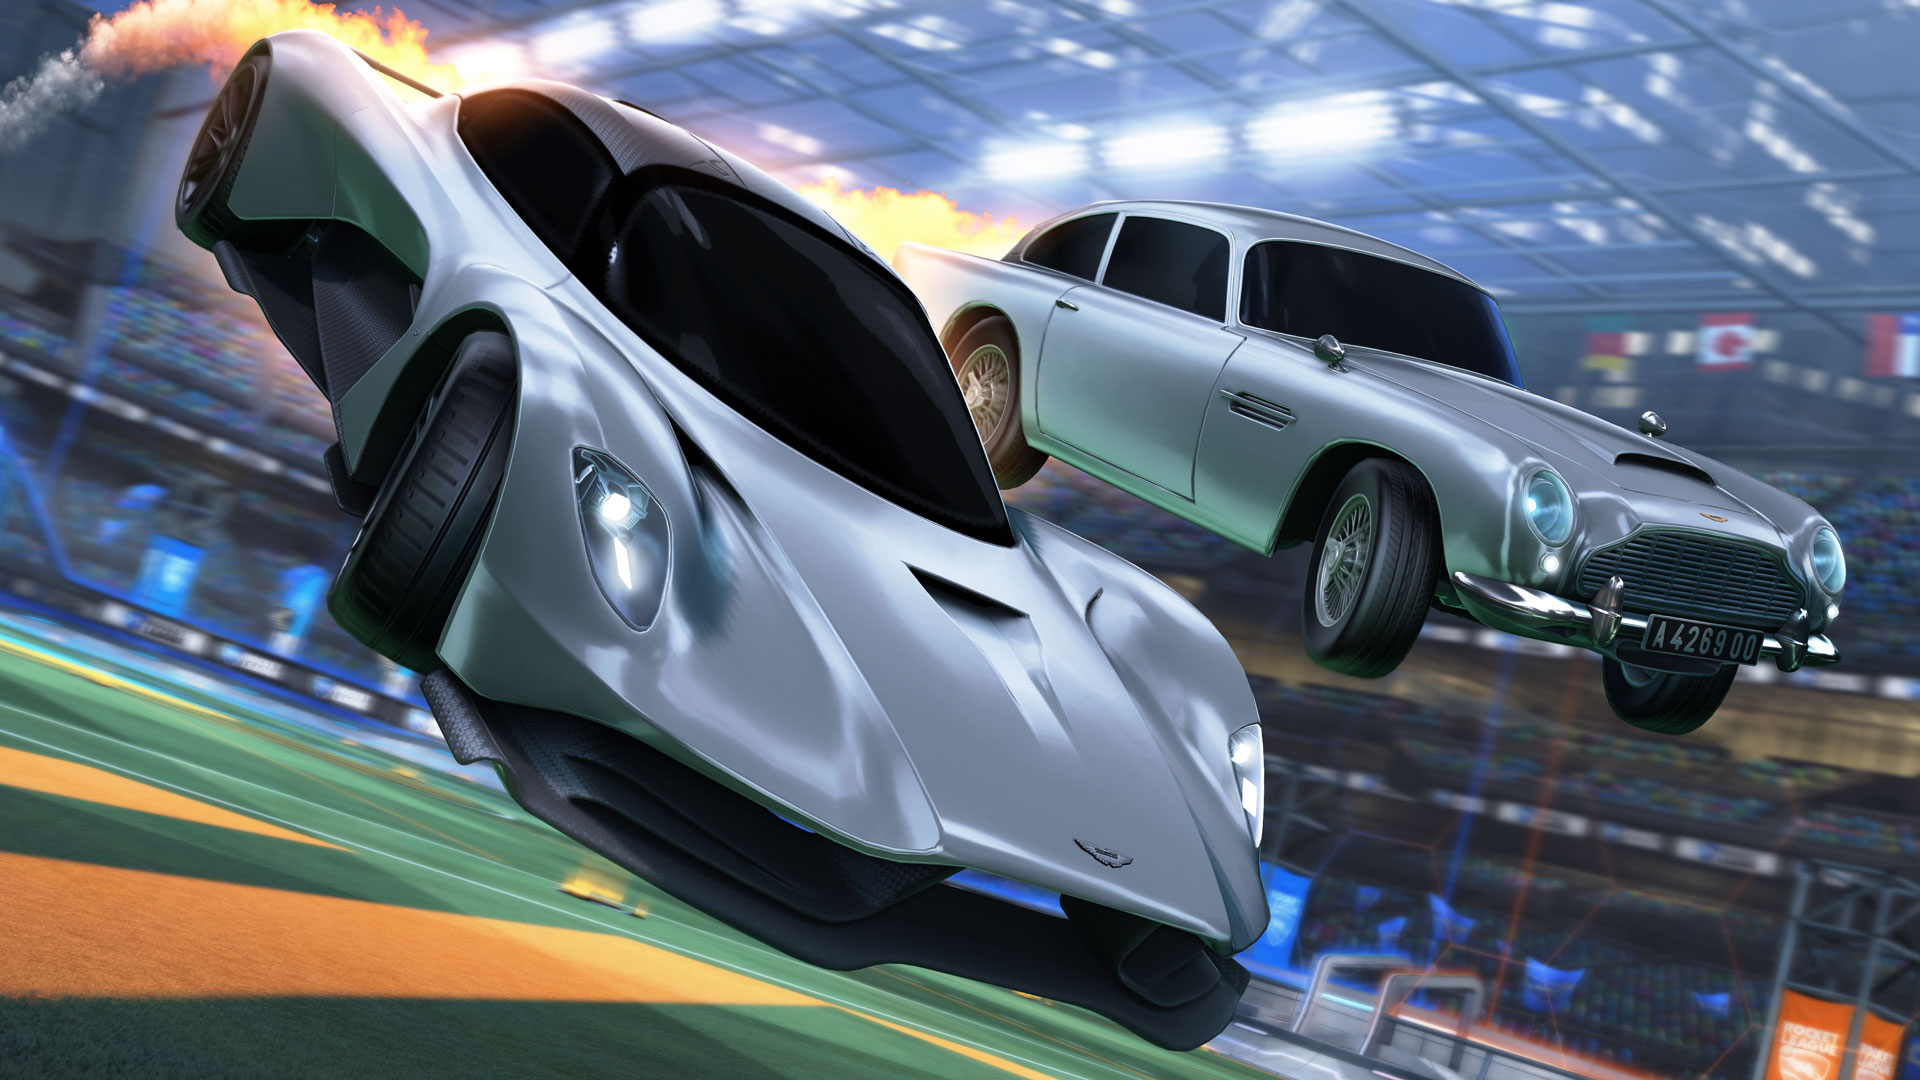 Drive James Bond’s new Aston Martin hybrid in Rocket League